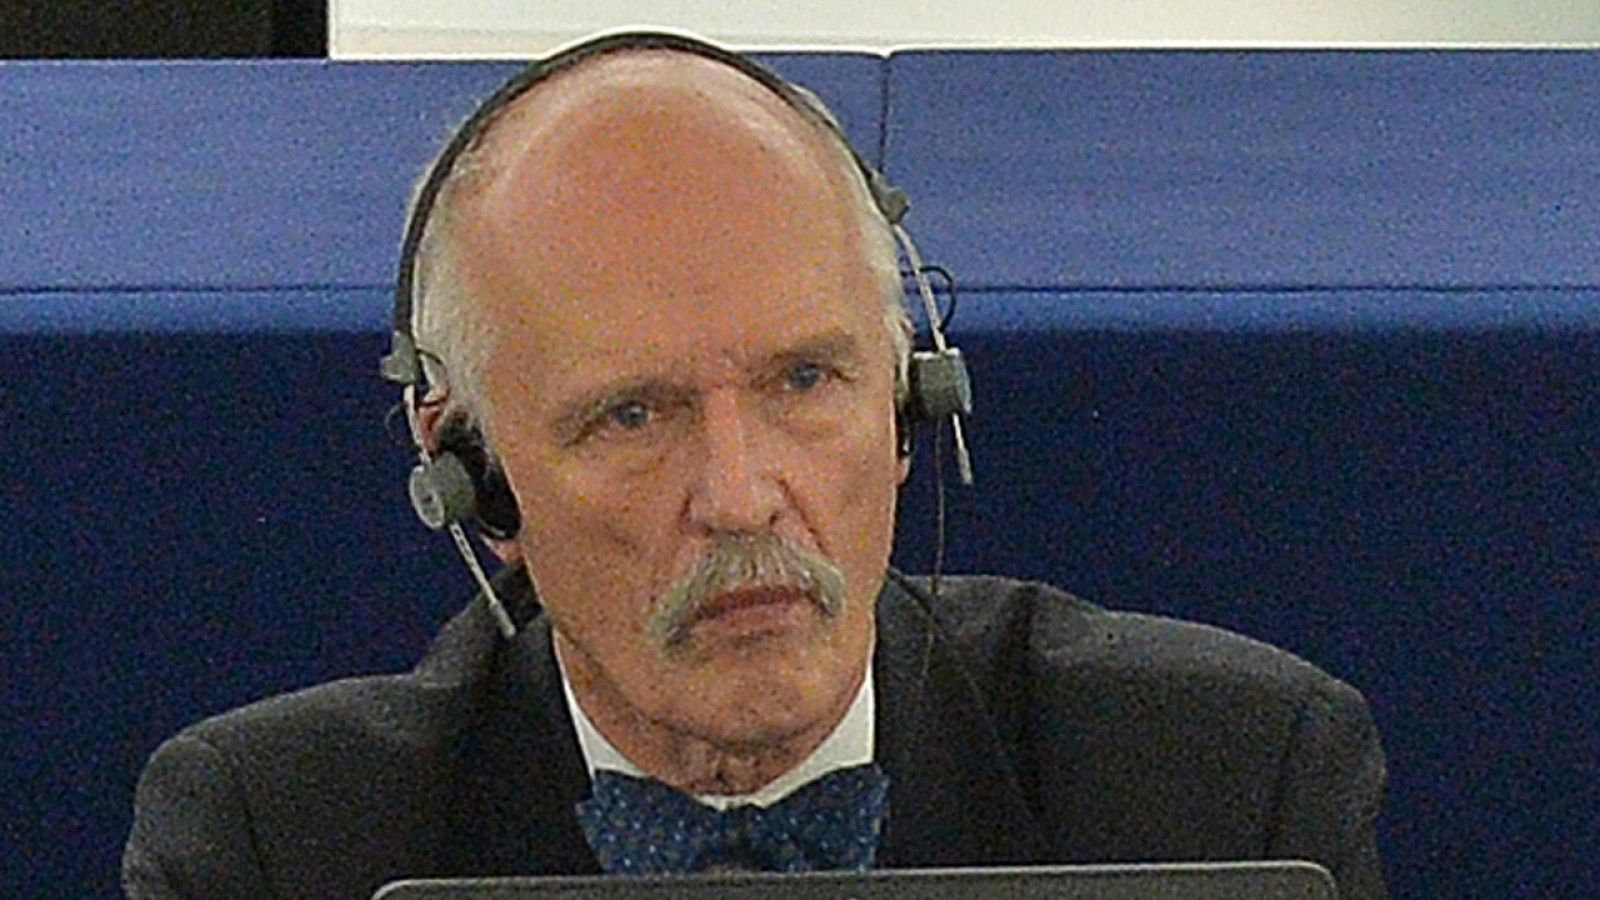 Imagen de archivo (2015) del eurodiputado de extrema derecha polaco Janusz Korwin-Mikke